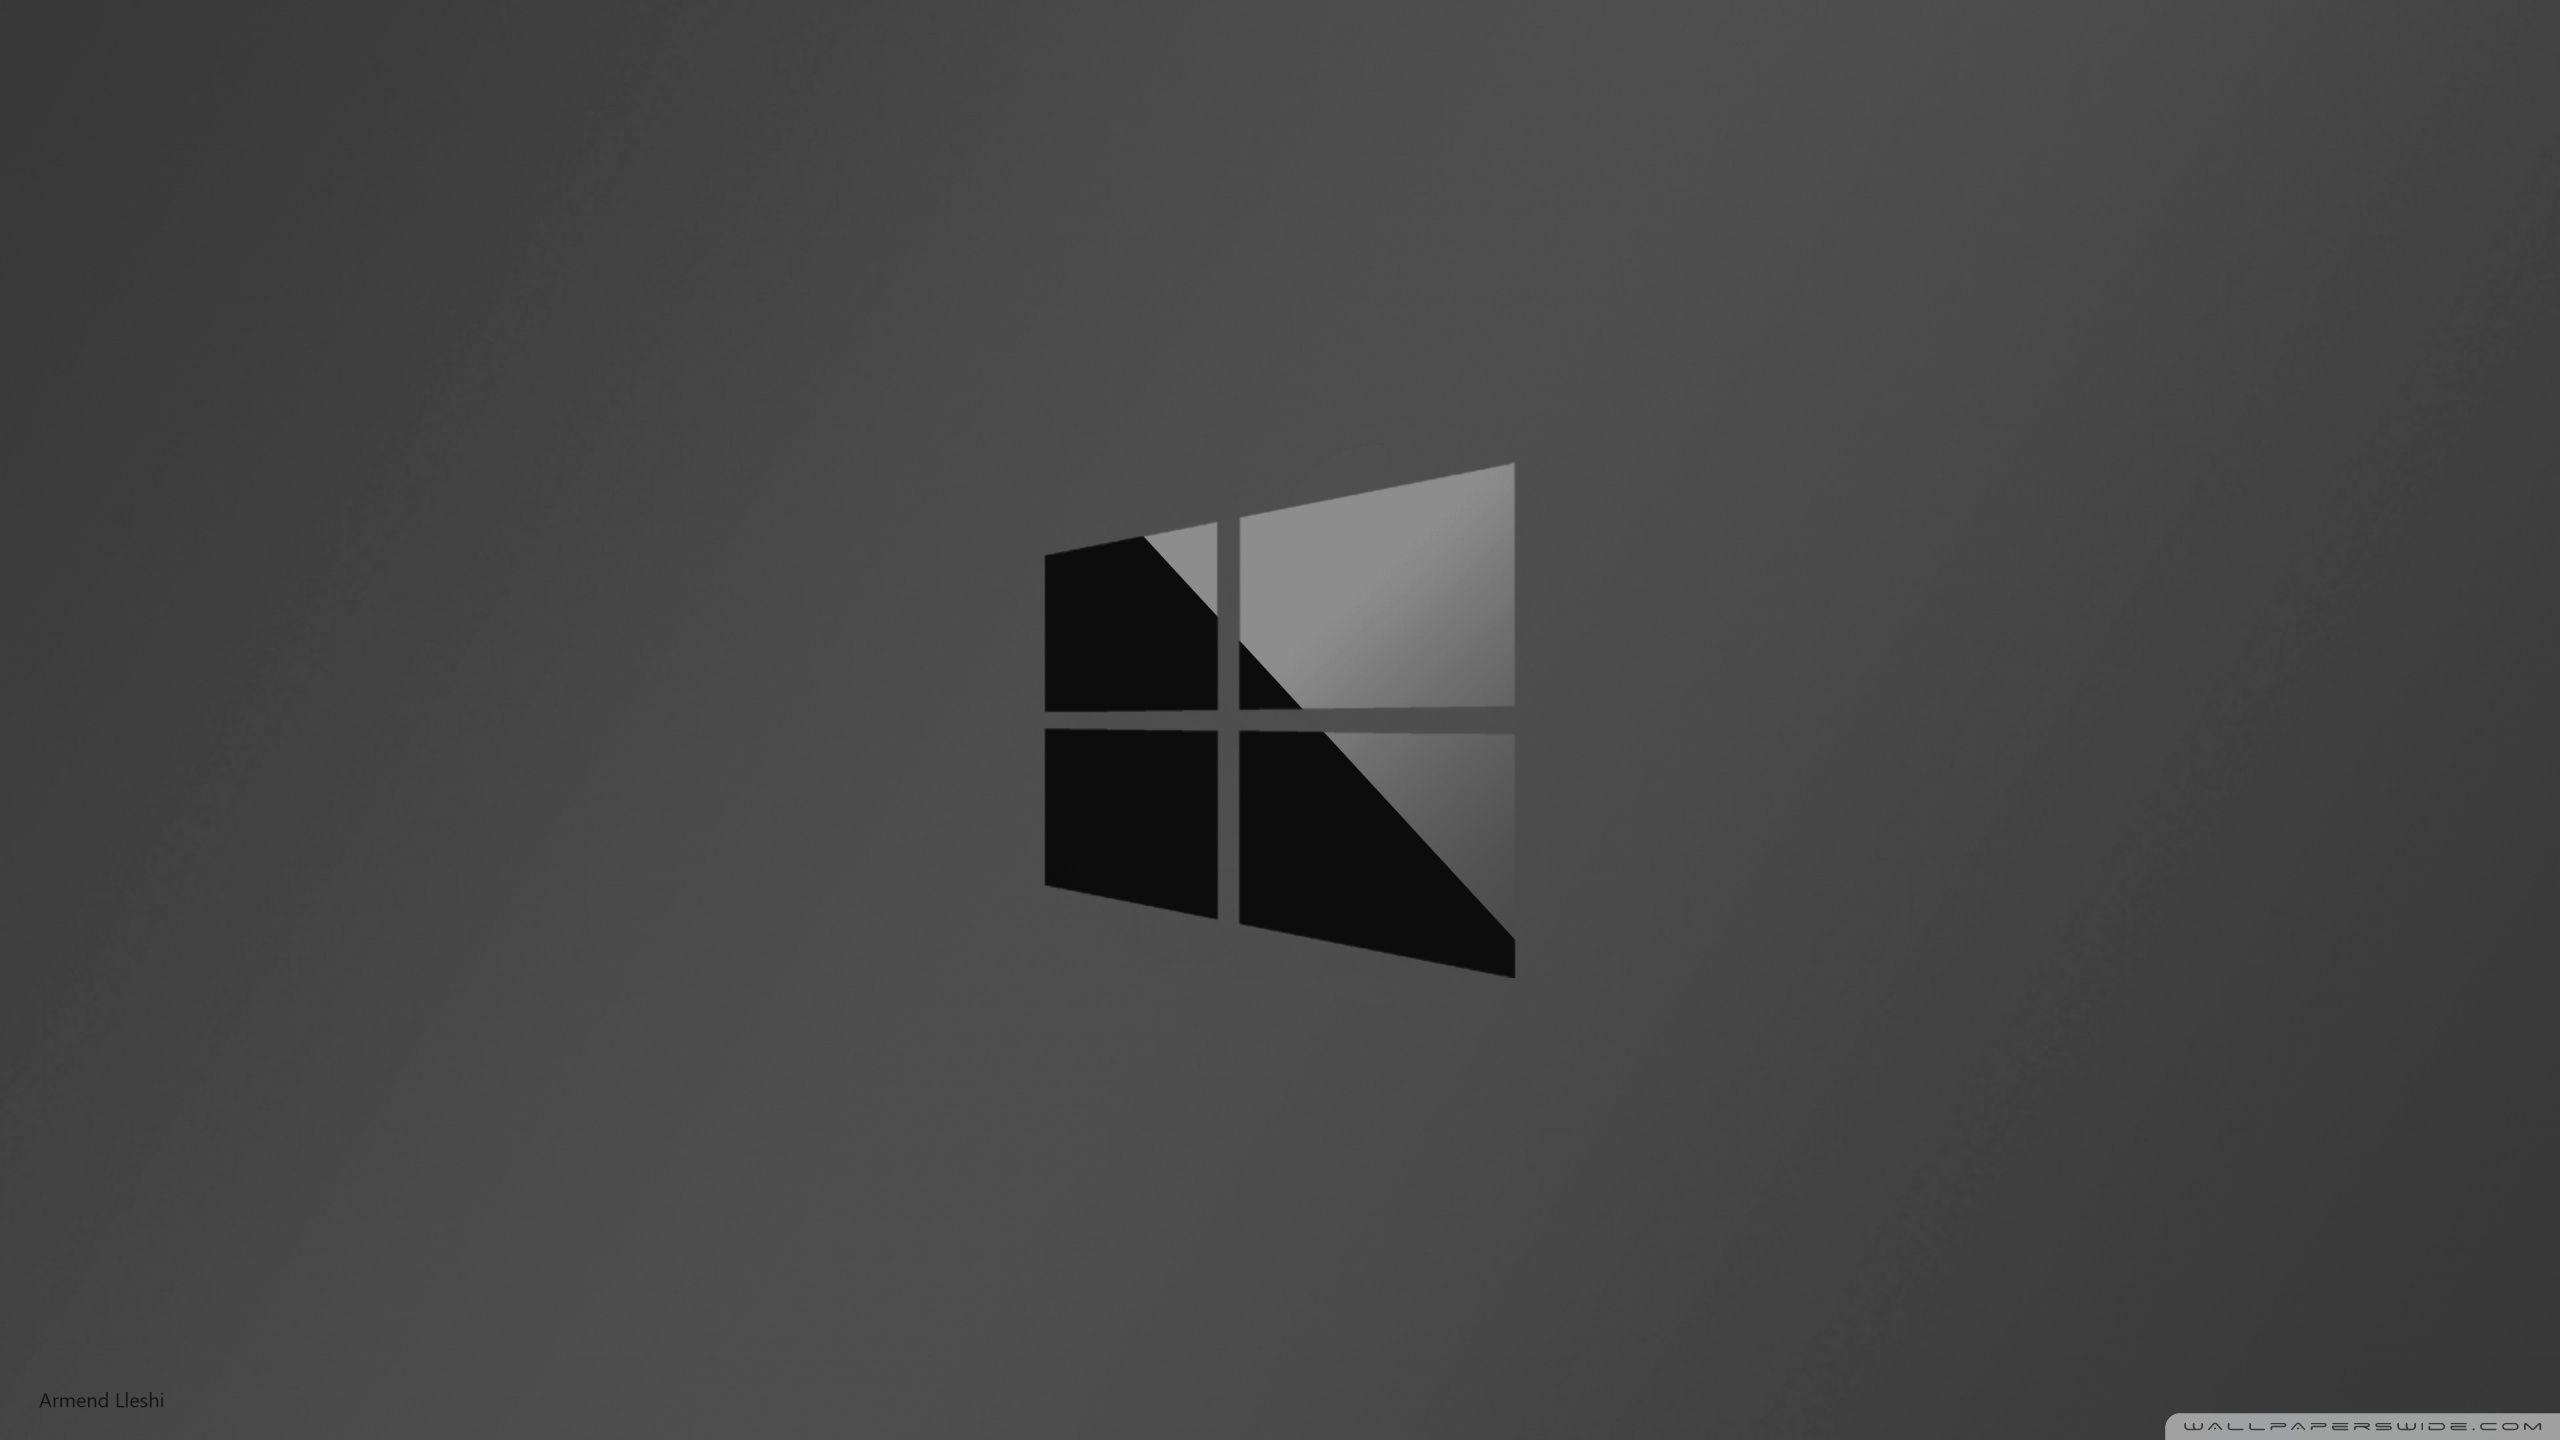 Black Windows 10 Hd Wallpapers - Top Free Black Windows 10 Hd